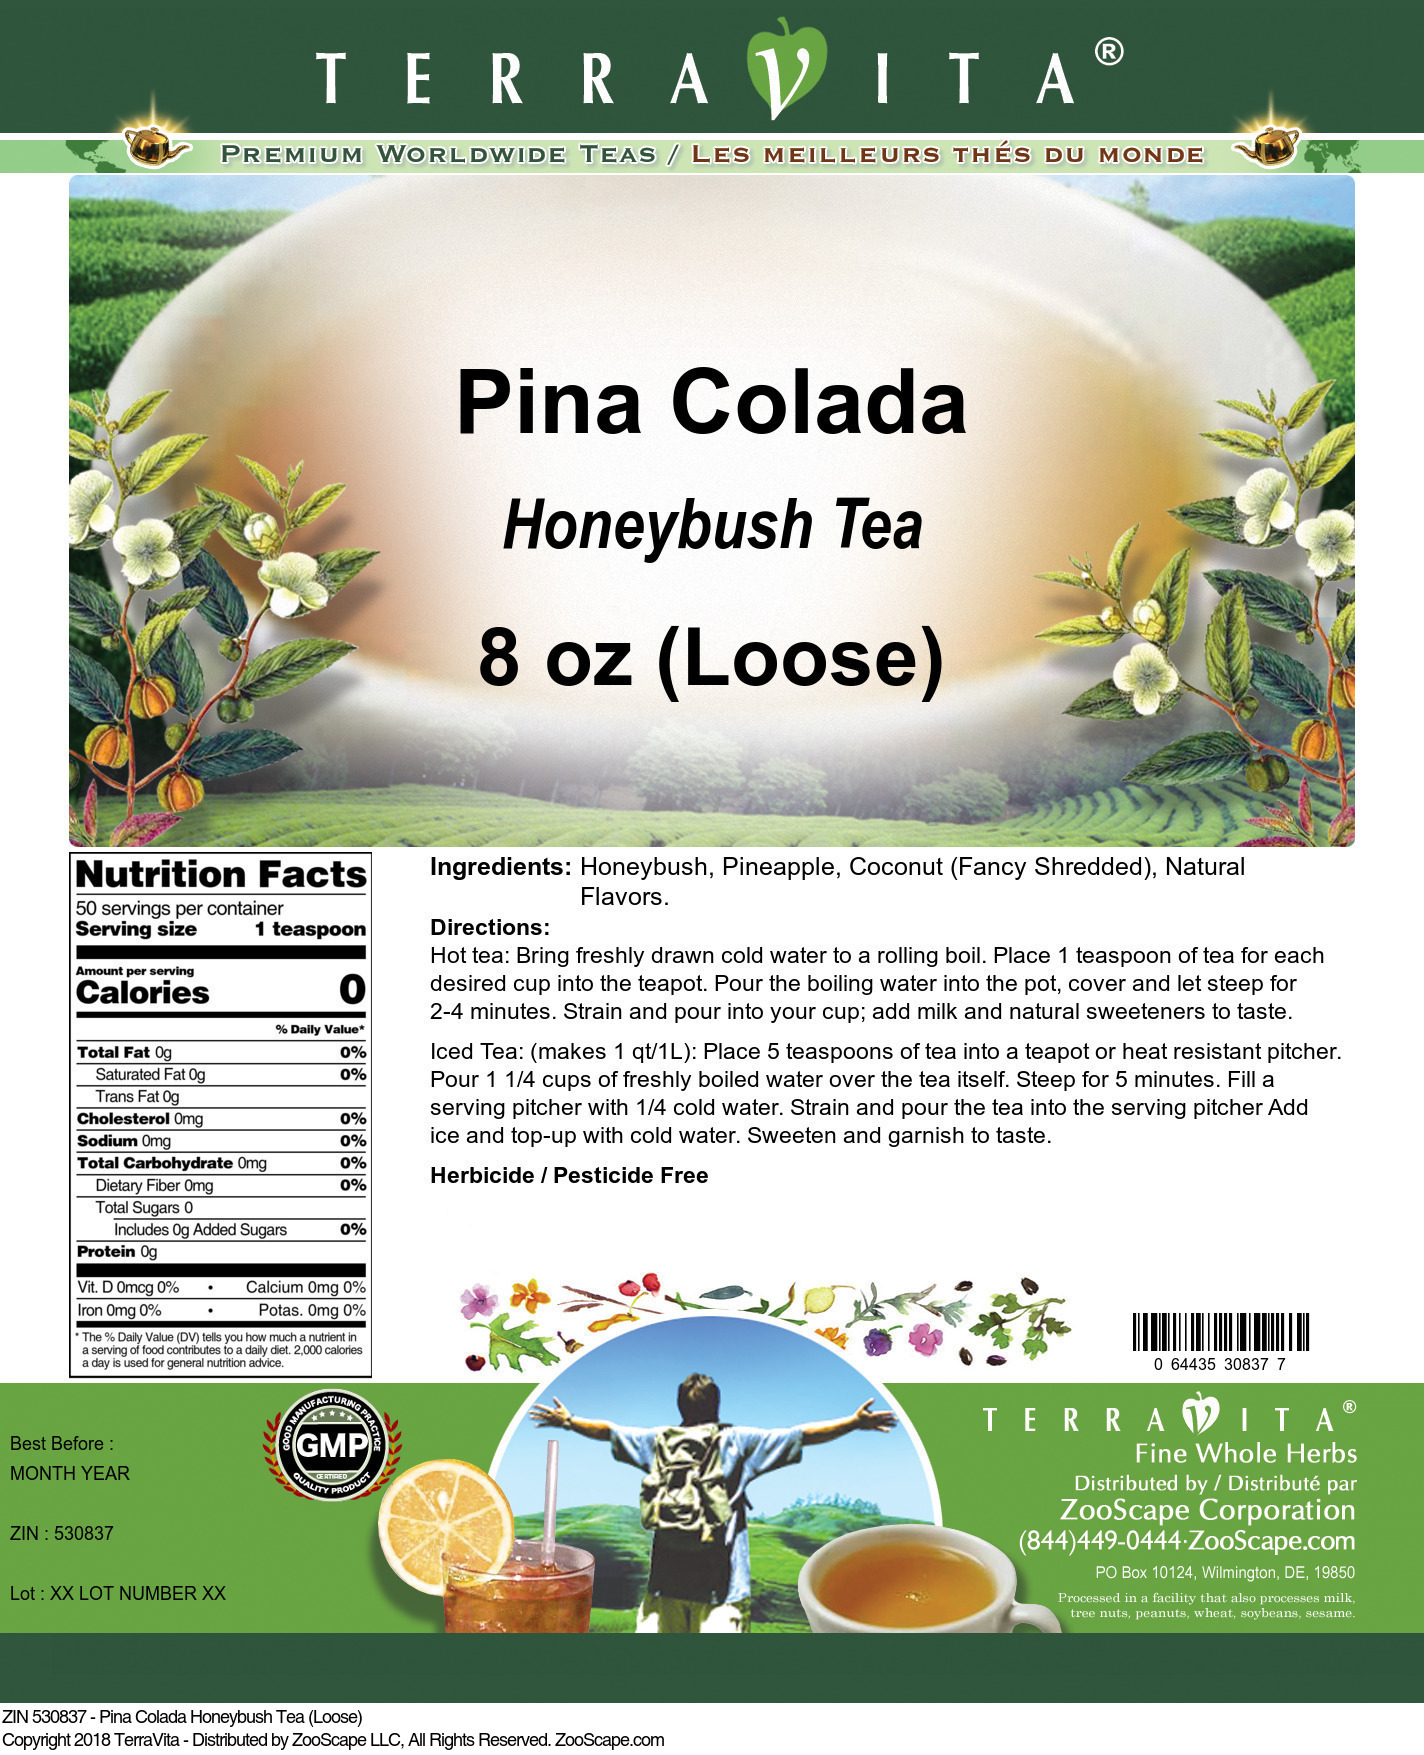 Pina Colada Honeybush Tea (Loose) - Label